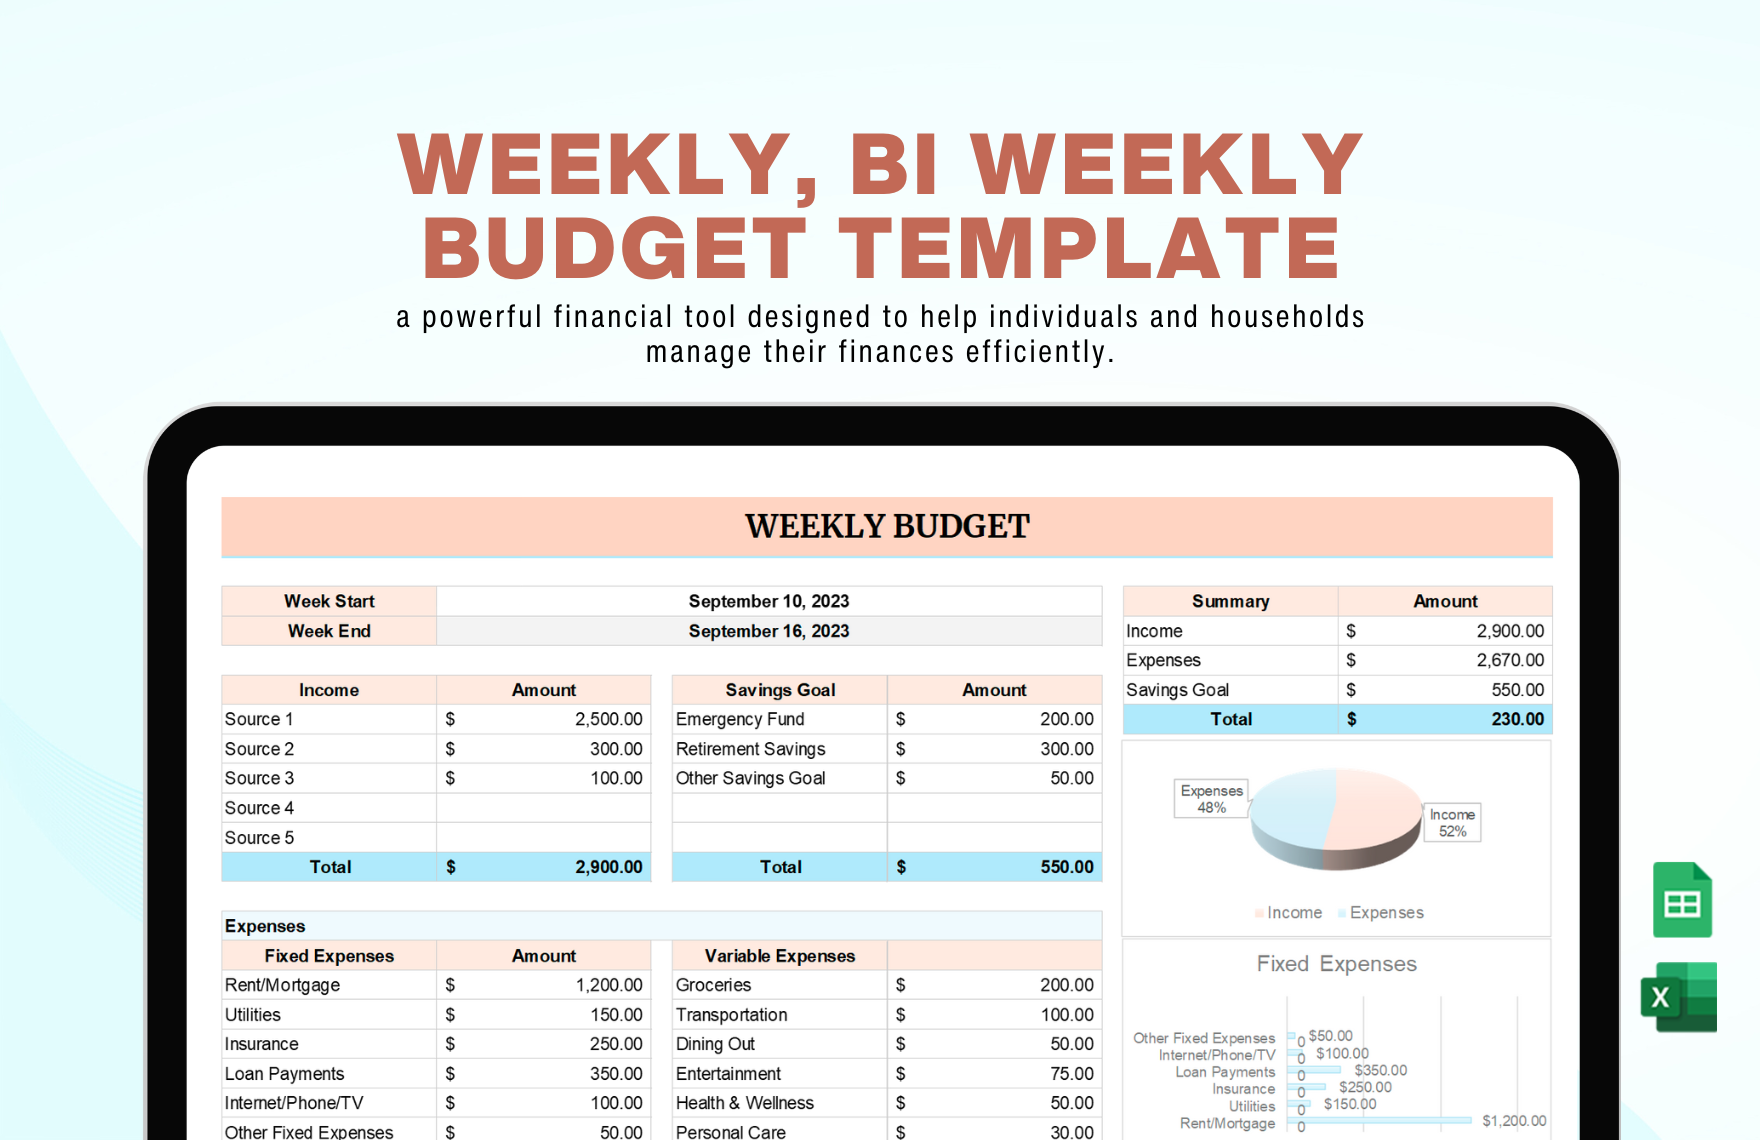 Free Weekly, Bi Weekly Budget Template in Excel, Google Sheets